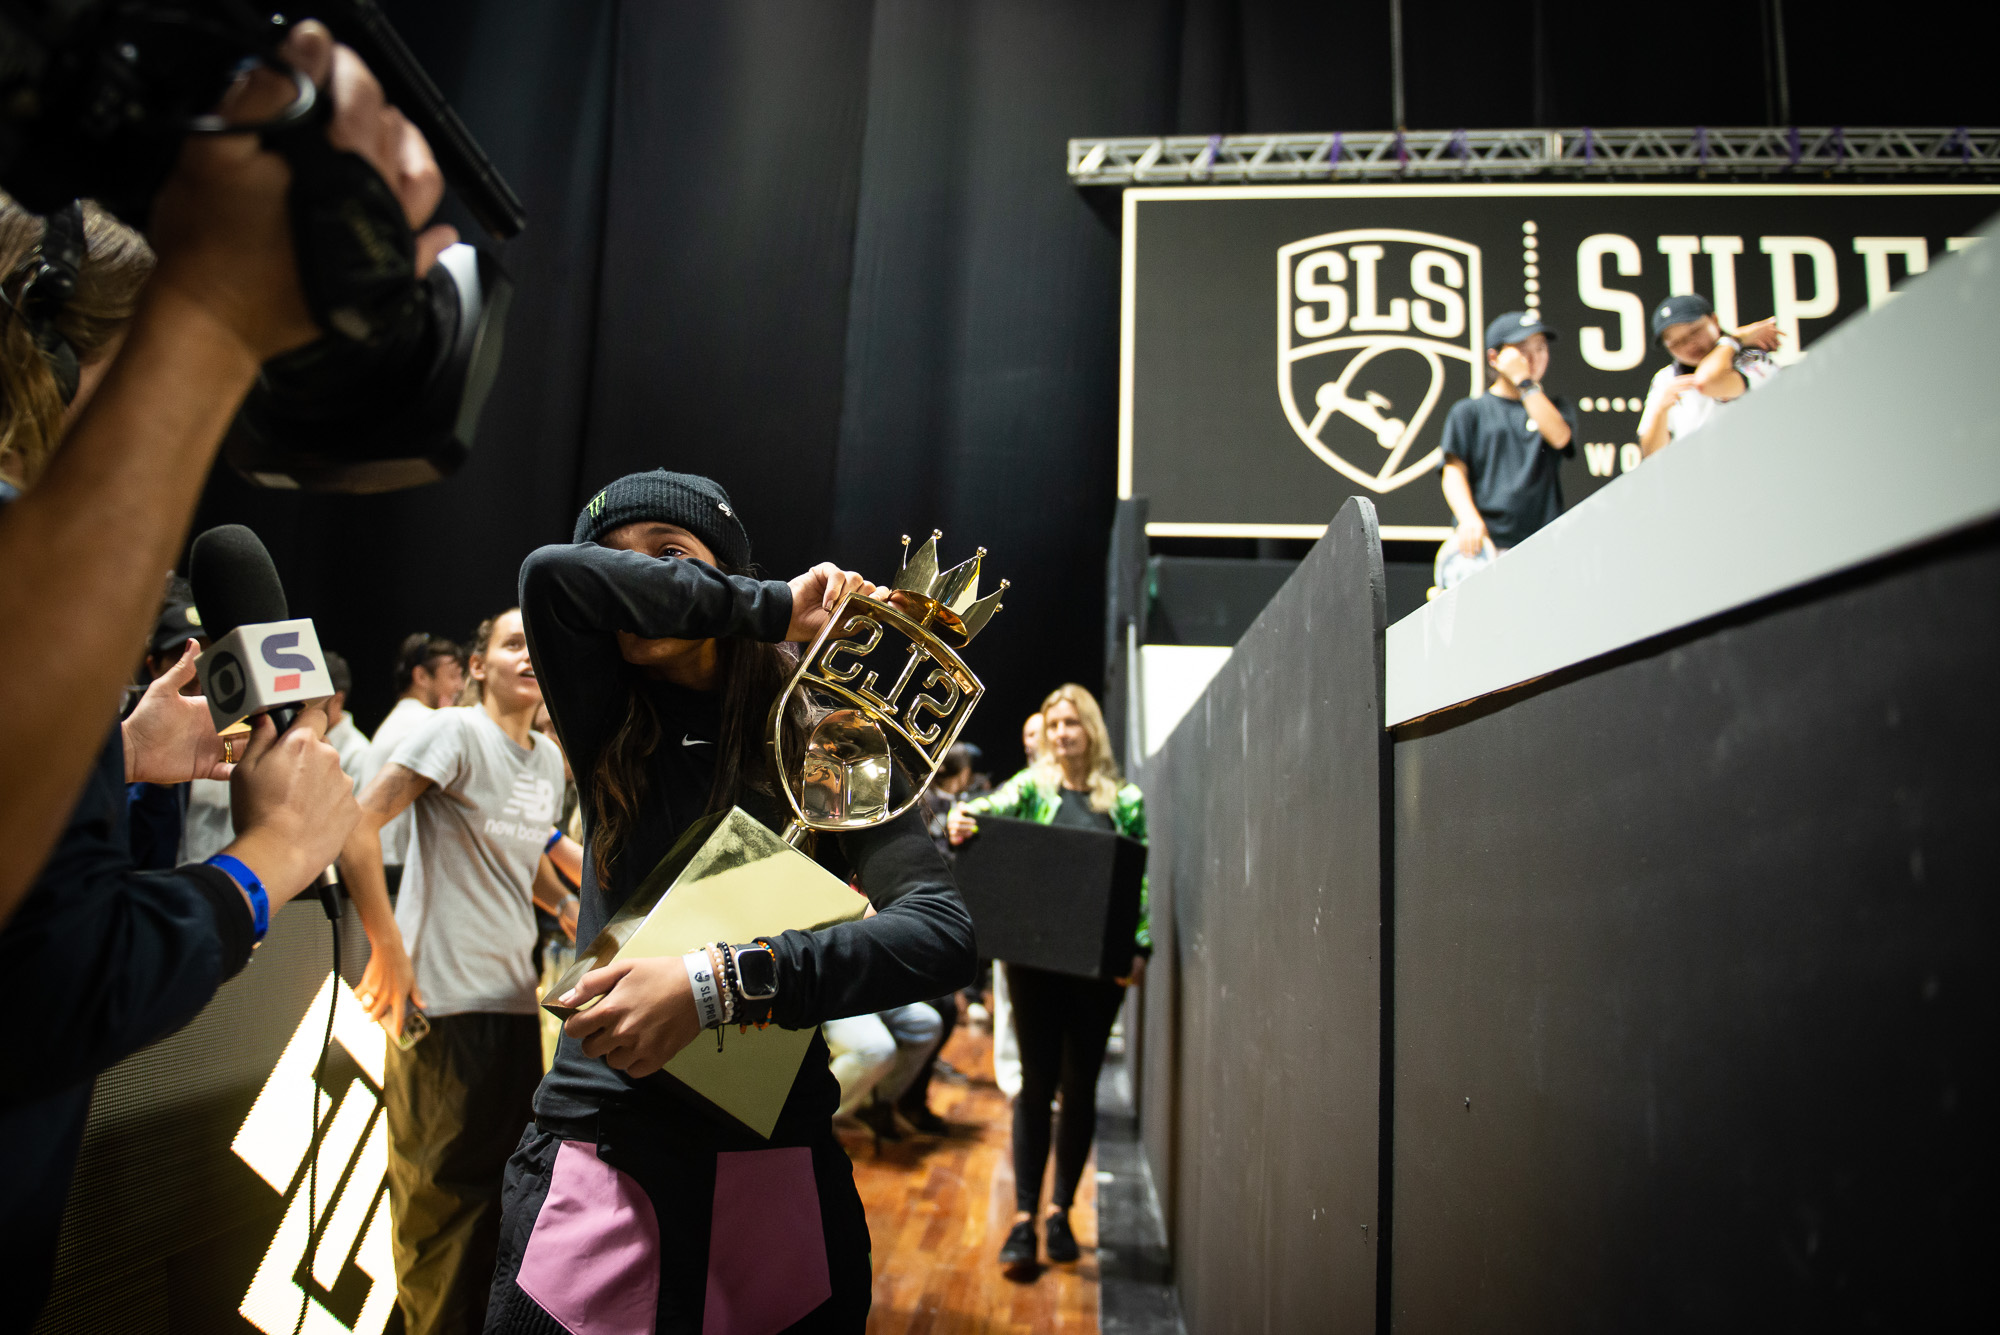 Monster Energy’s Rayssa Leal Wins 2022 SLS Super Crown World Championship in Rio de Janeiro